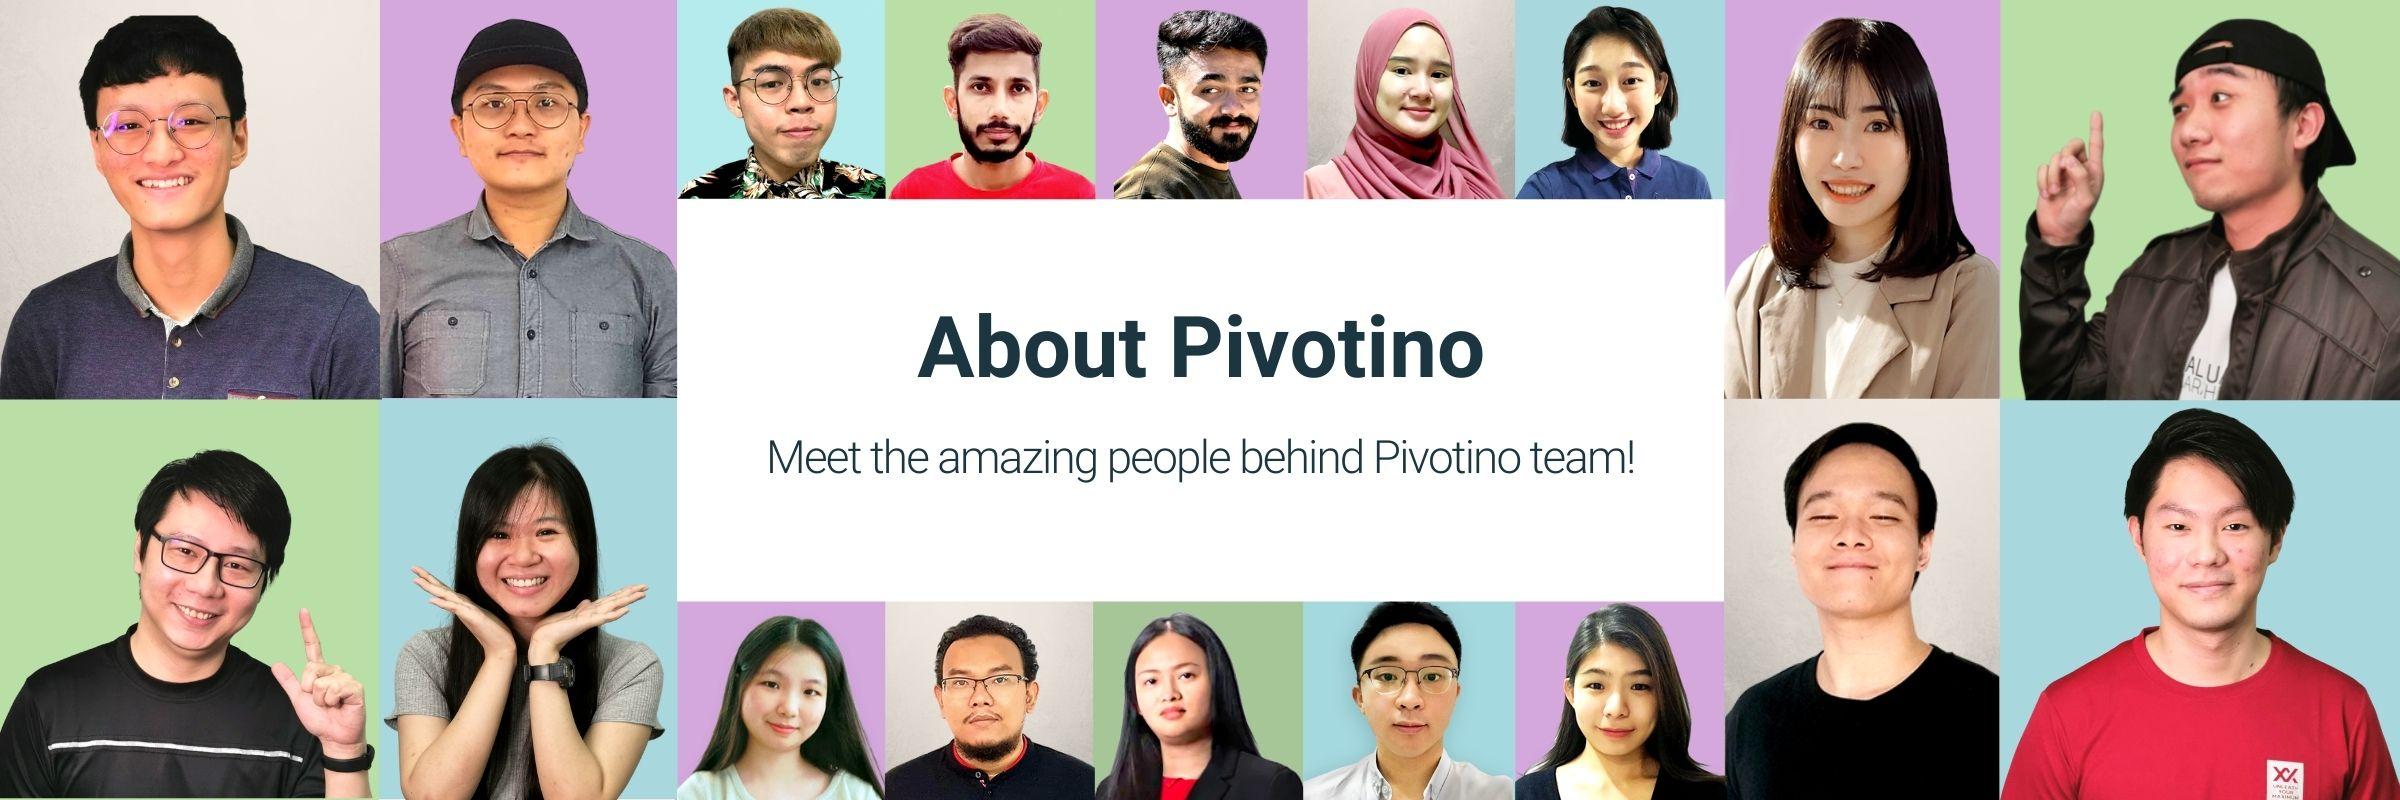 Meeting the amazing people behind Pivotino team!